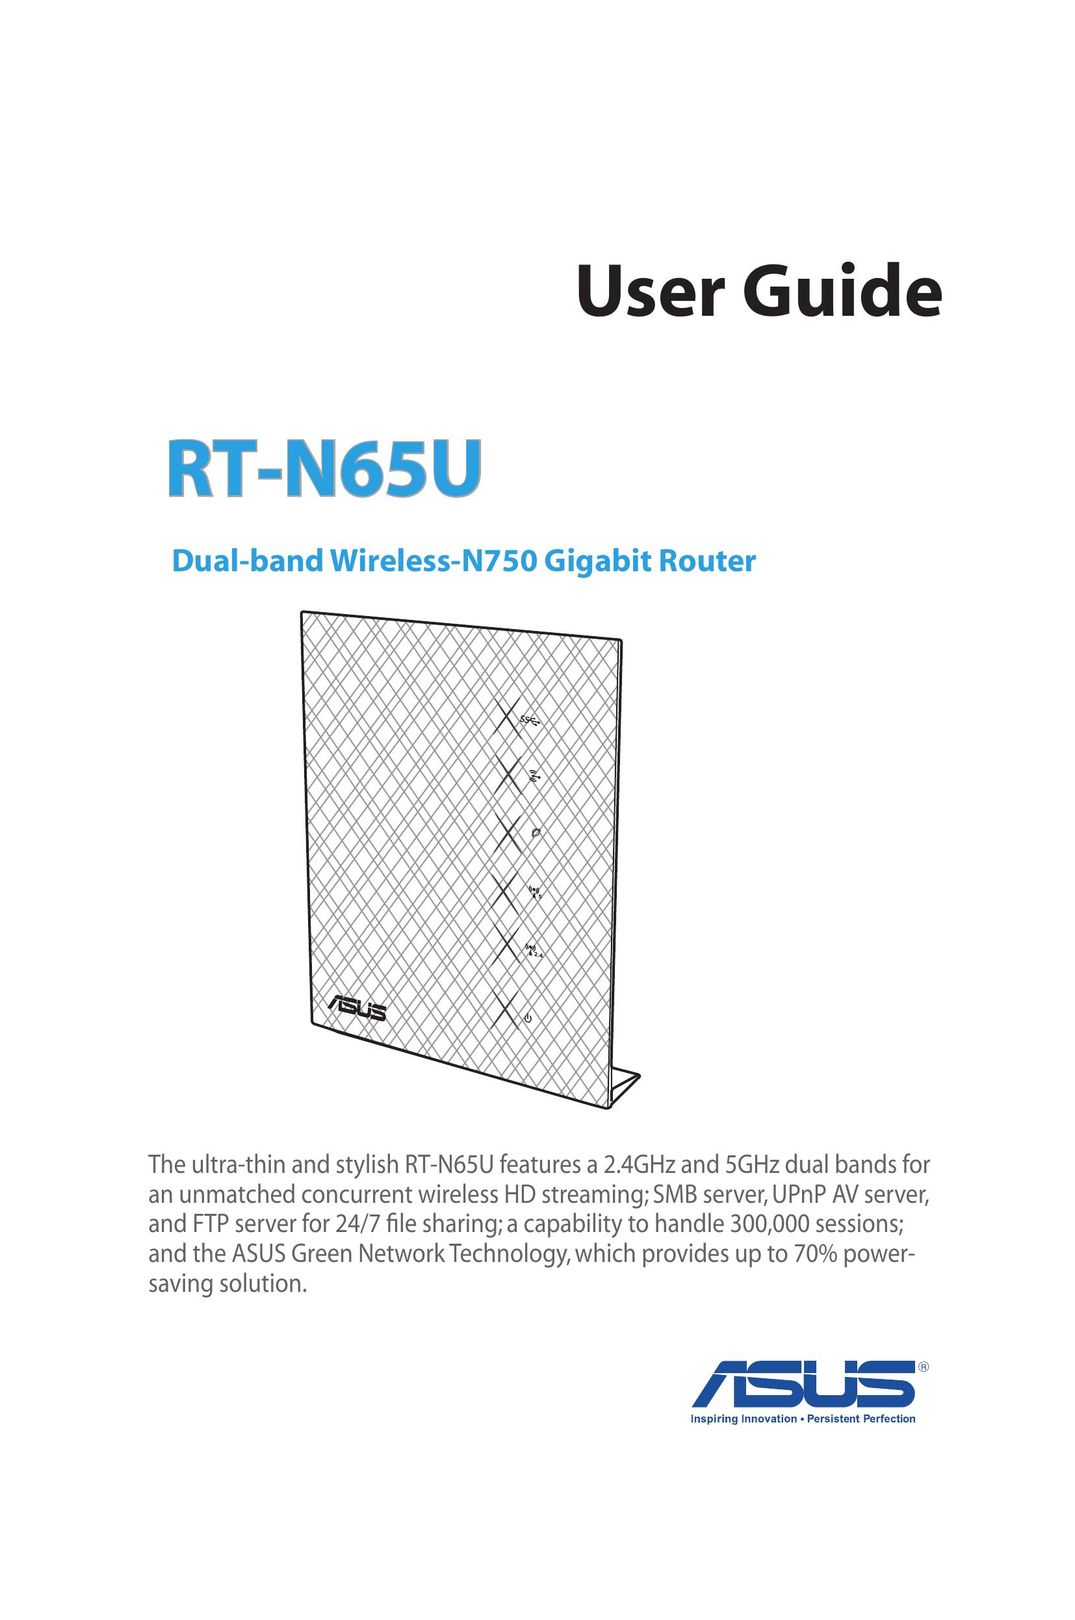 Asus RTN65U Network Router User Manual